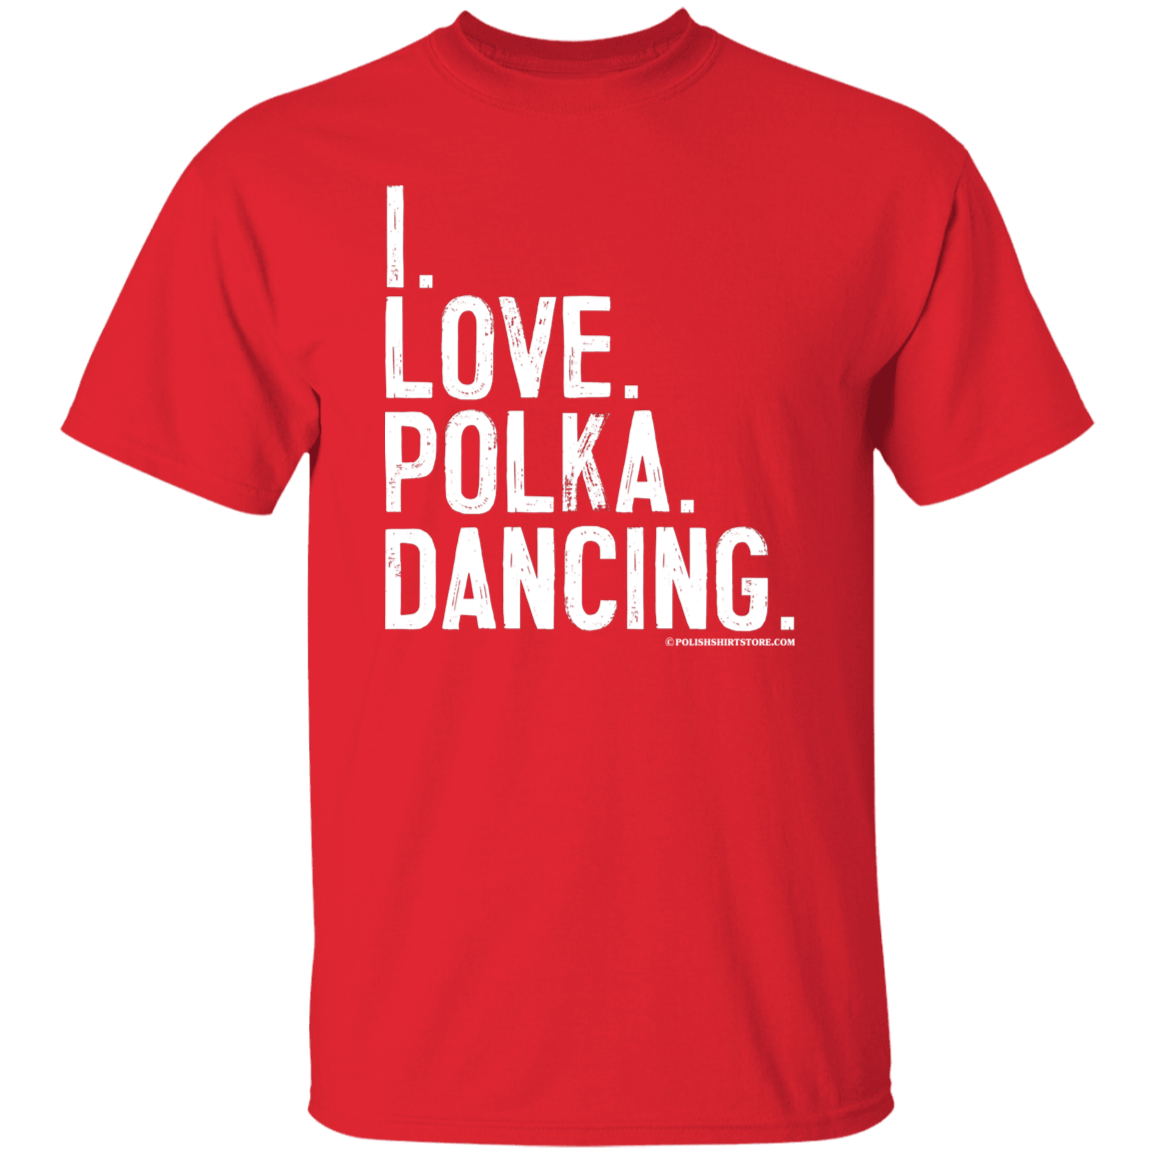 I Love Polka Dancing Apparel CustomCat G500 5.3 oz. T-Shirt Red S